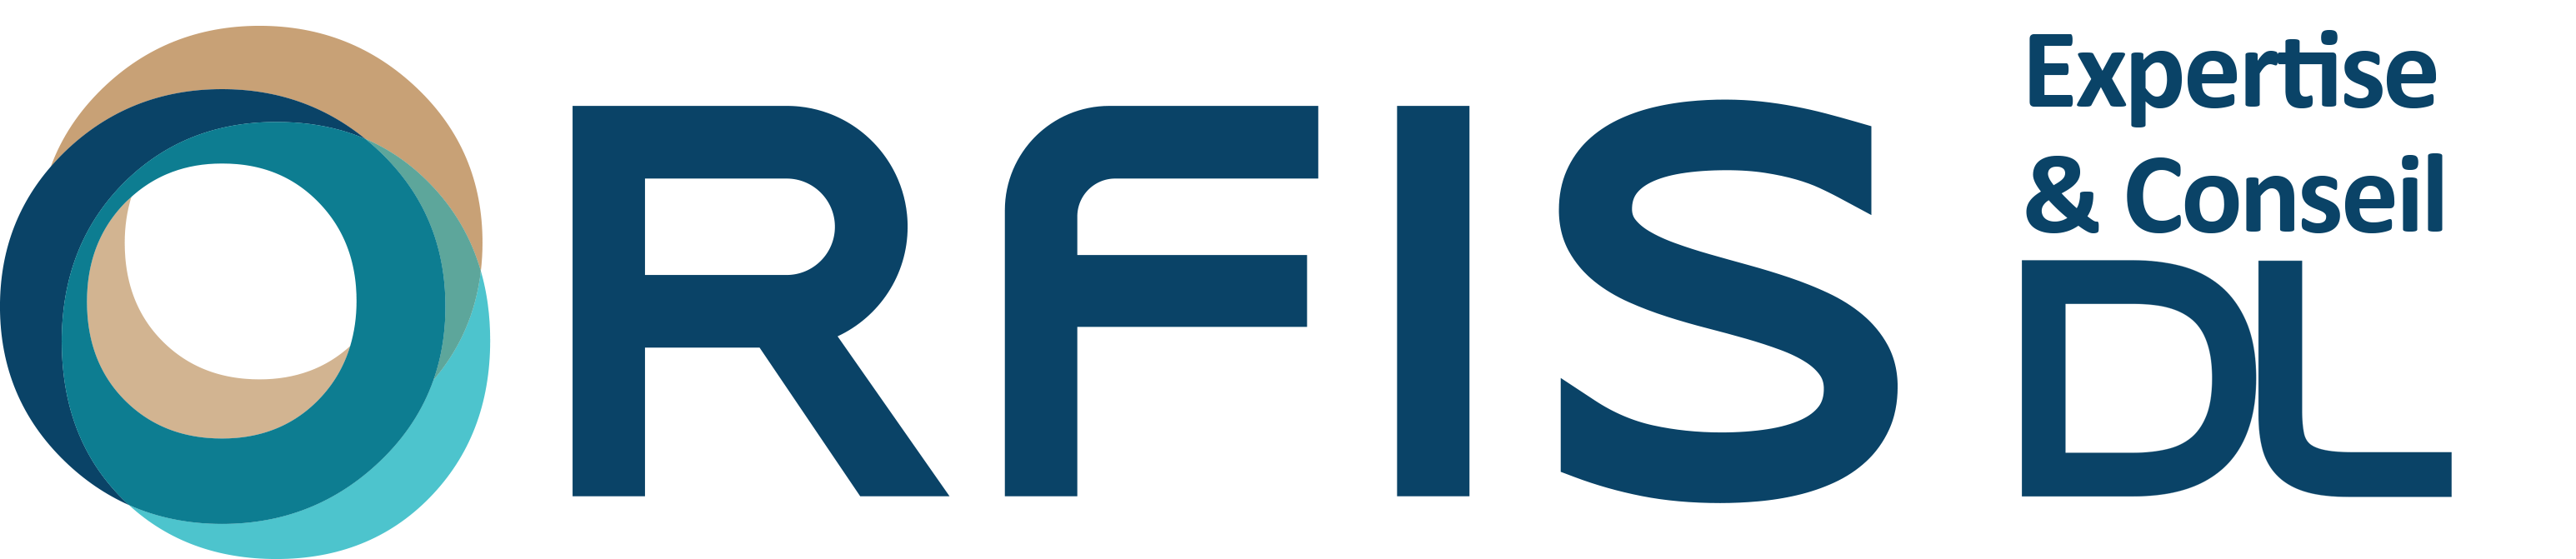 logo_ORFISDL_2019.png